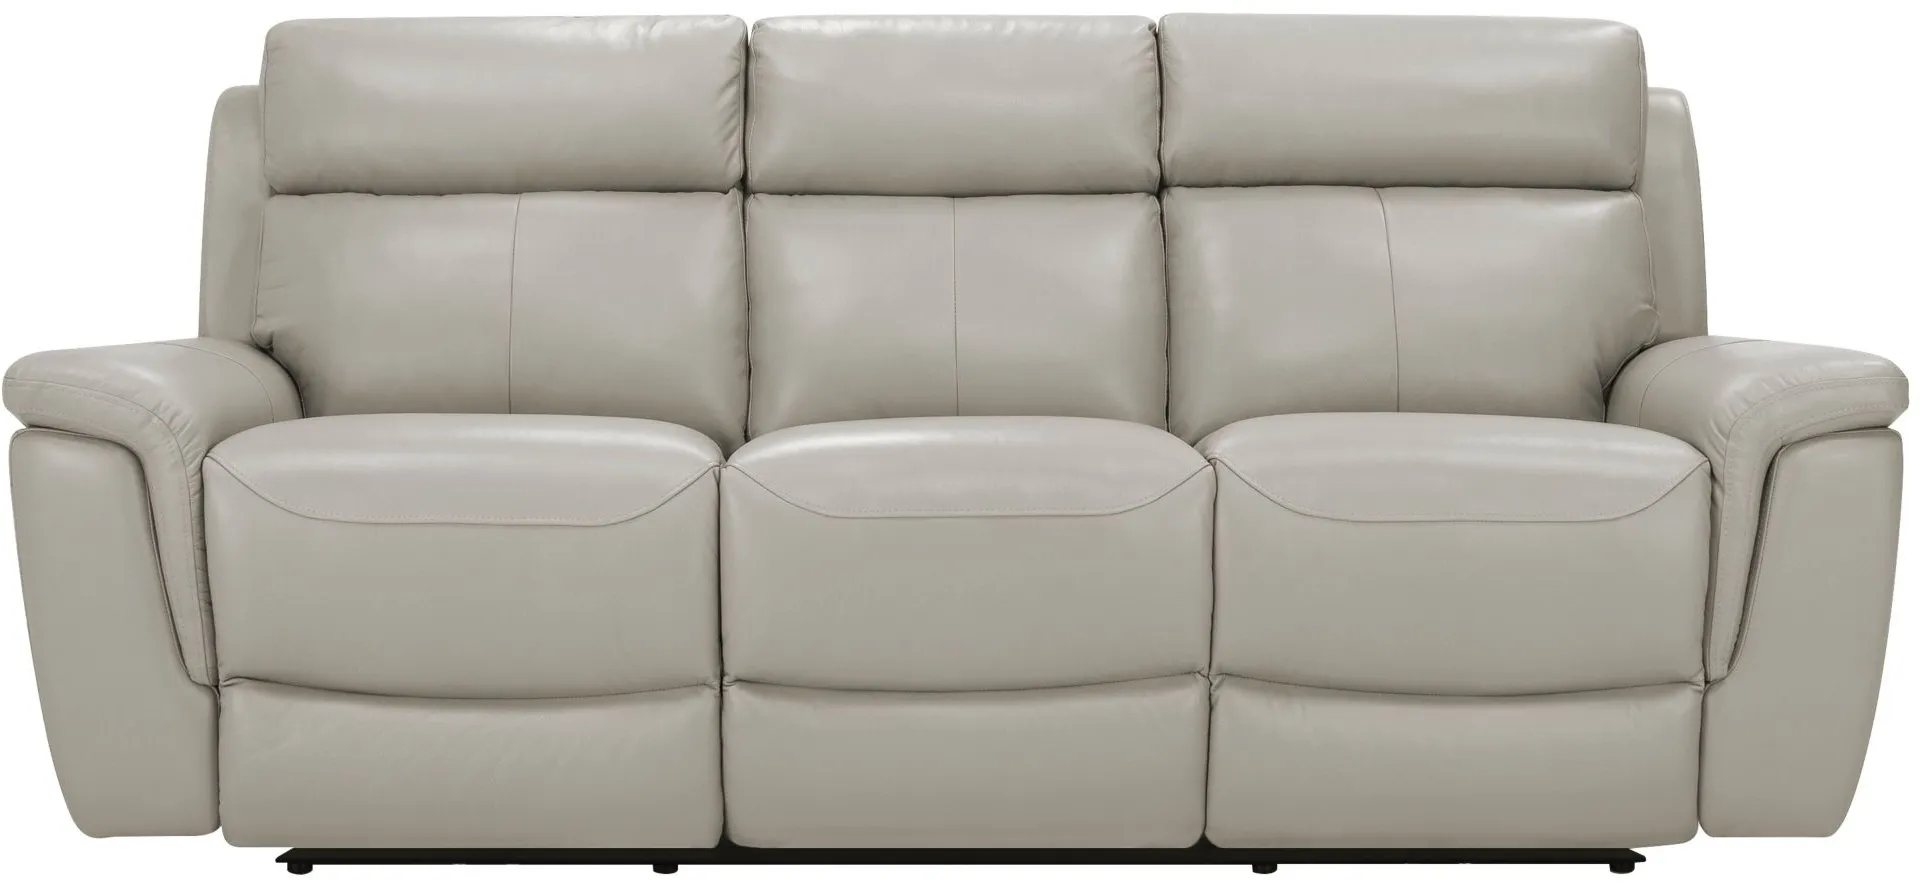 Dryden Leather Power Sofa w/ Power Headrest in Gray by Bellanest